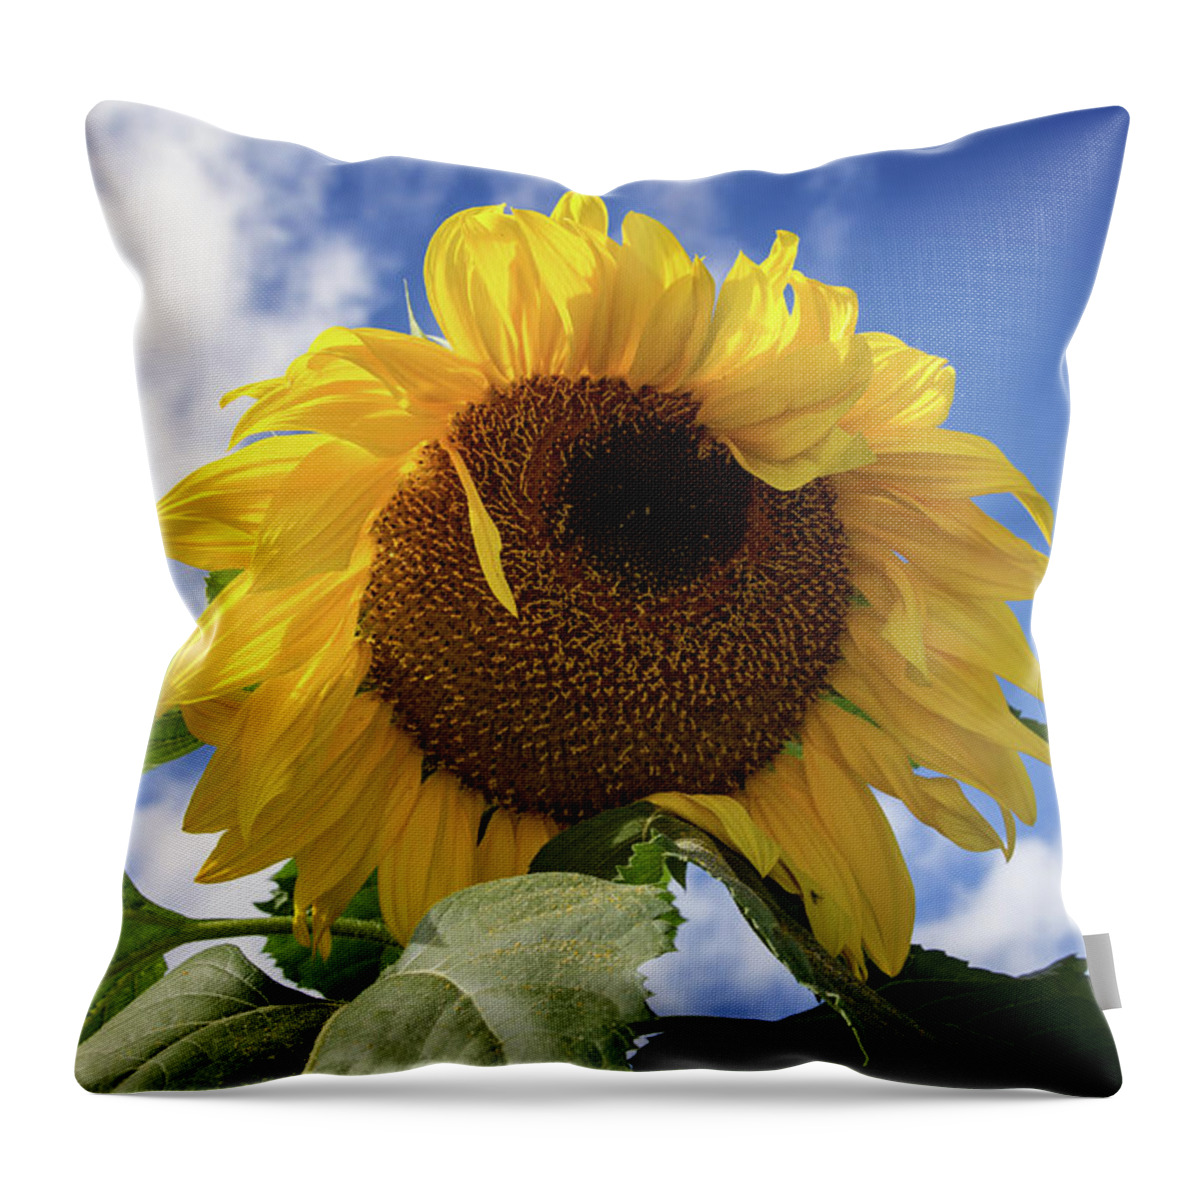 Sunflowers Throw Pillow featuring the photograph The Last Sunflower by John Haldane